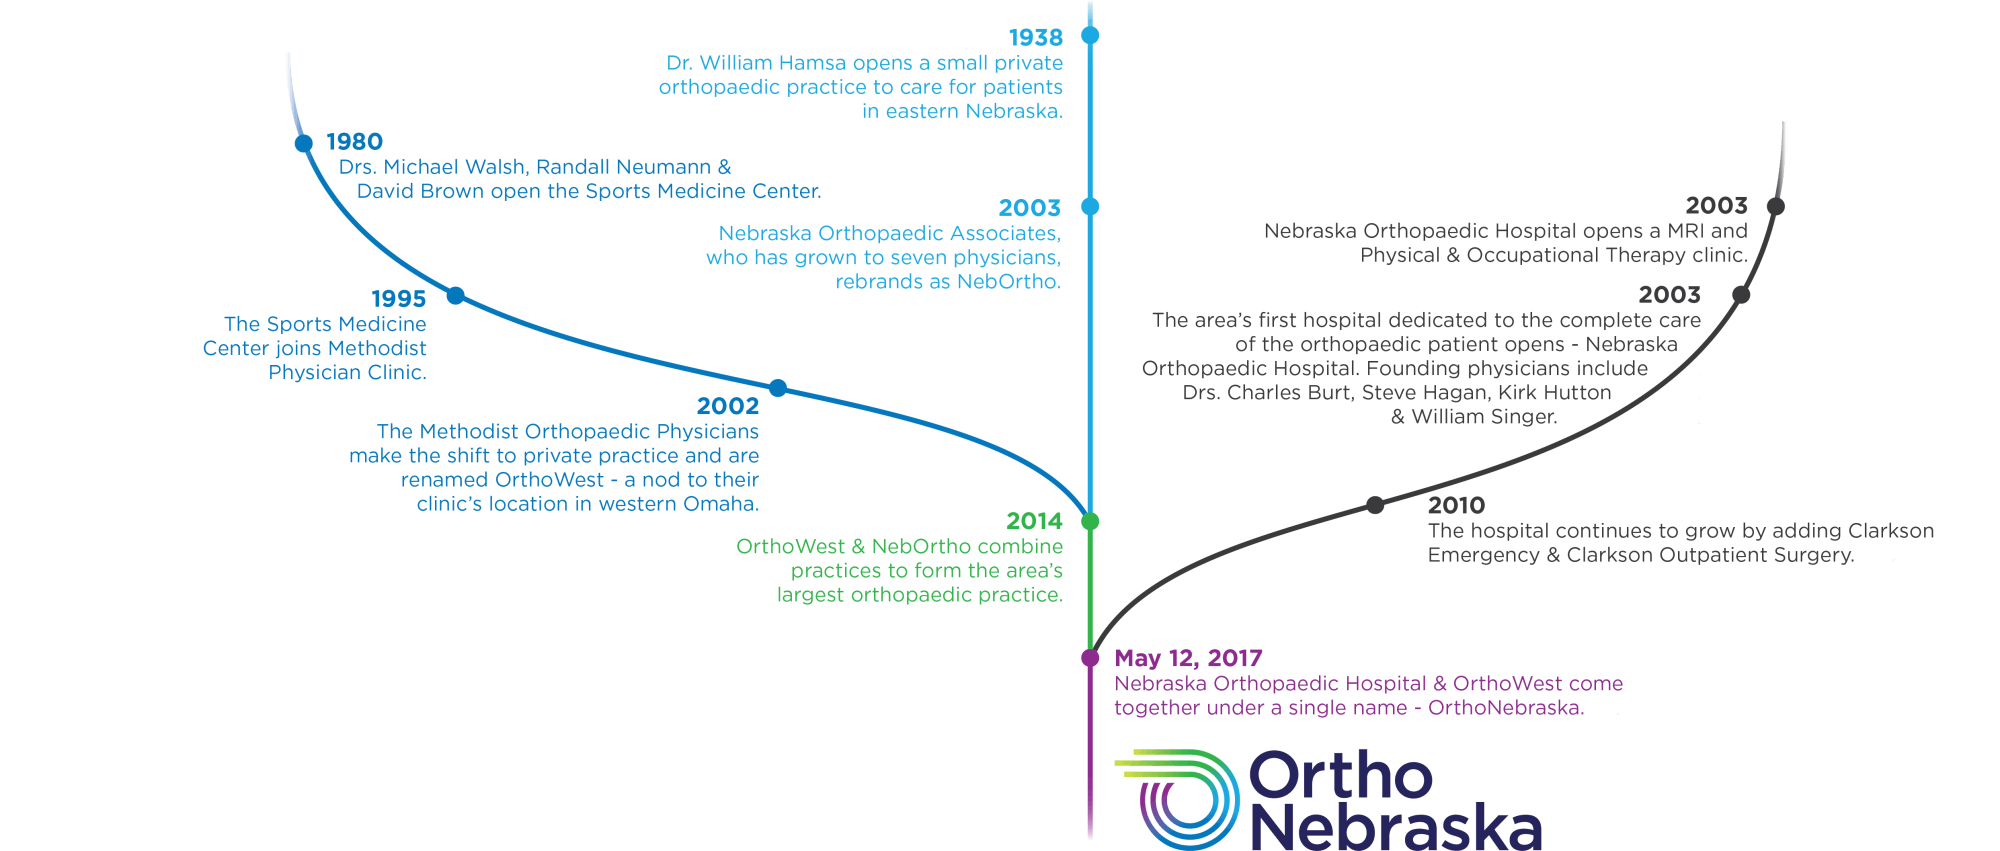 OrthoNebraska History Timeline Graphic